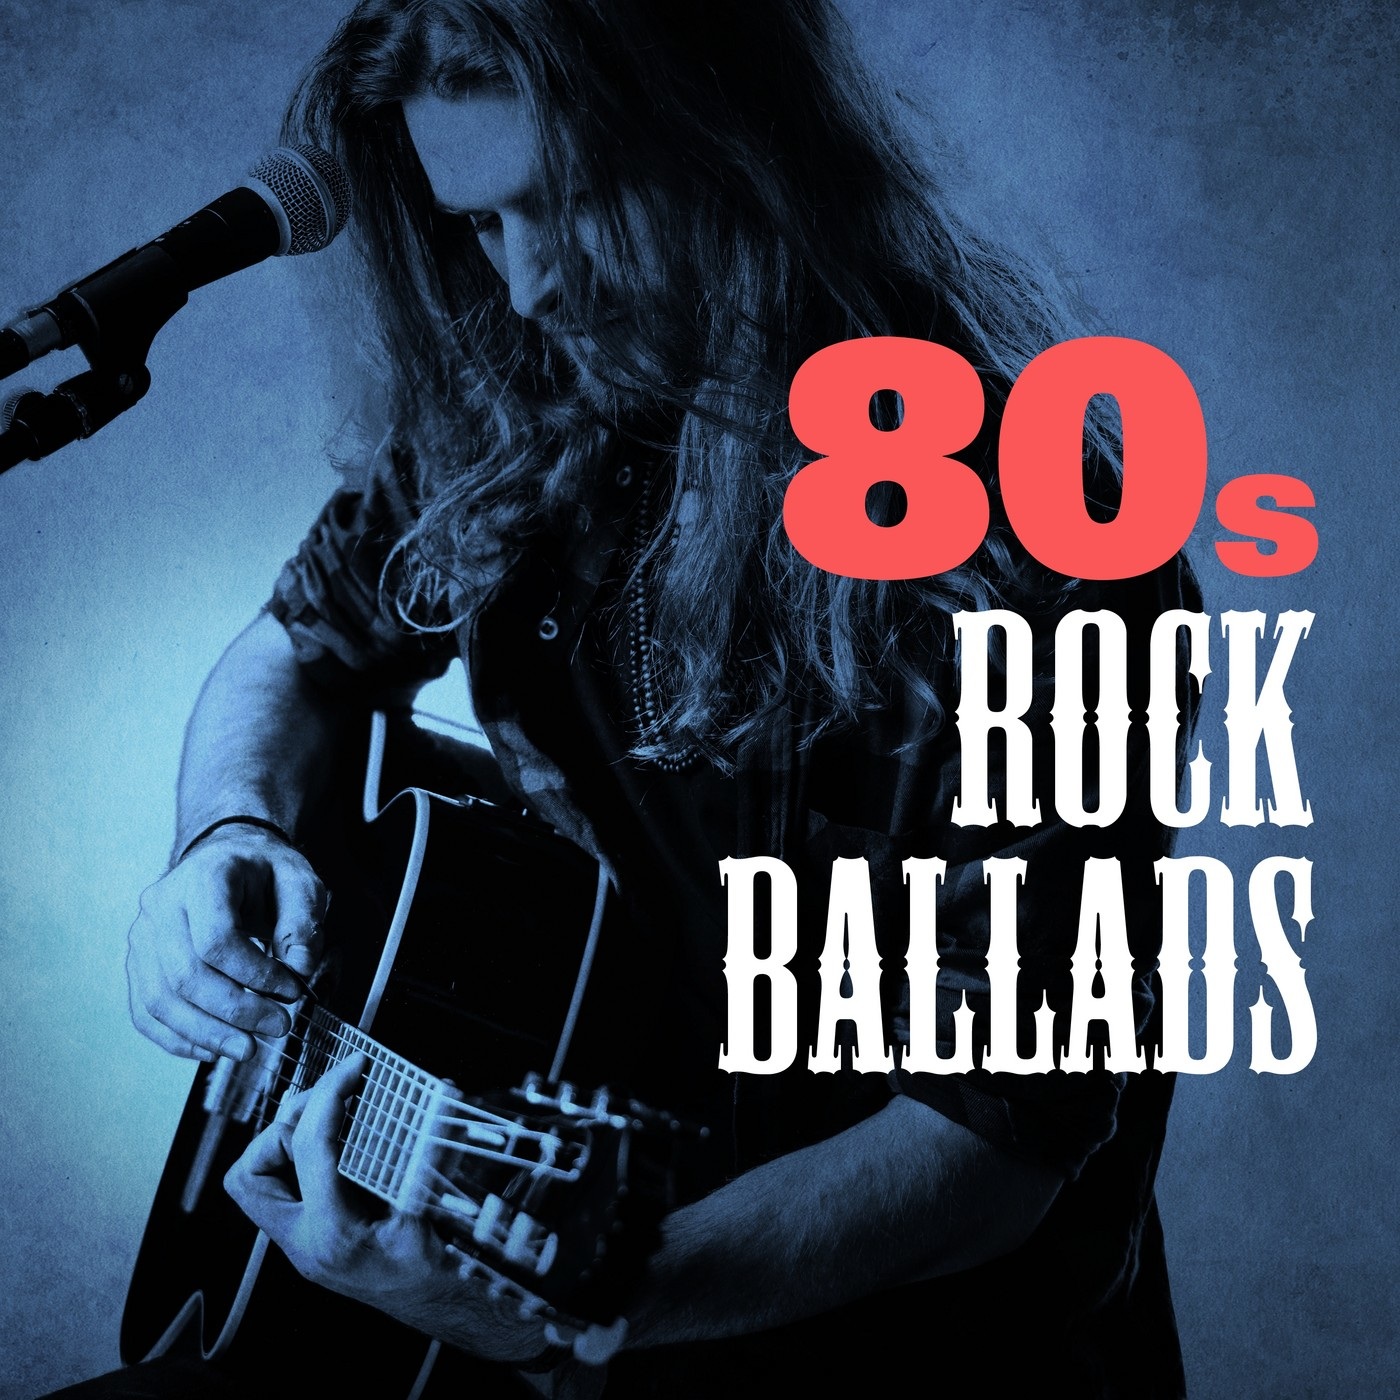 Flac 2018. 80s Rock Ballads. Rock 80-s обложка. Rock Ballads CD. Rock Ballads 80s обложка альбома.